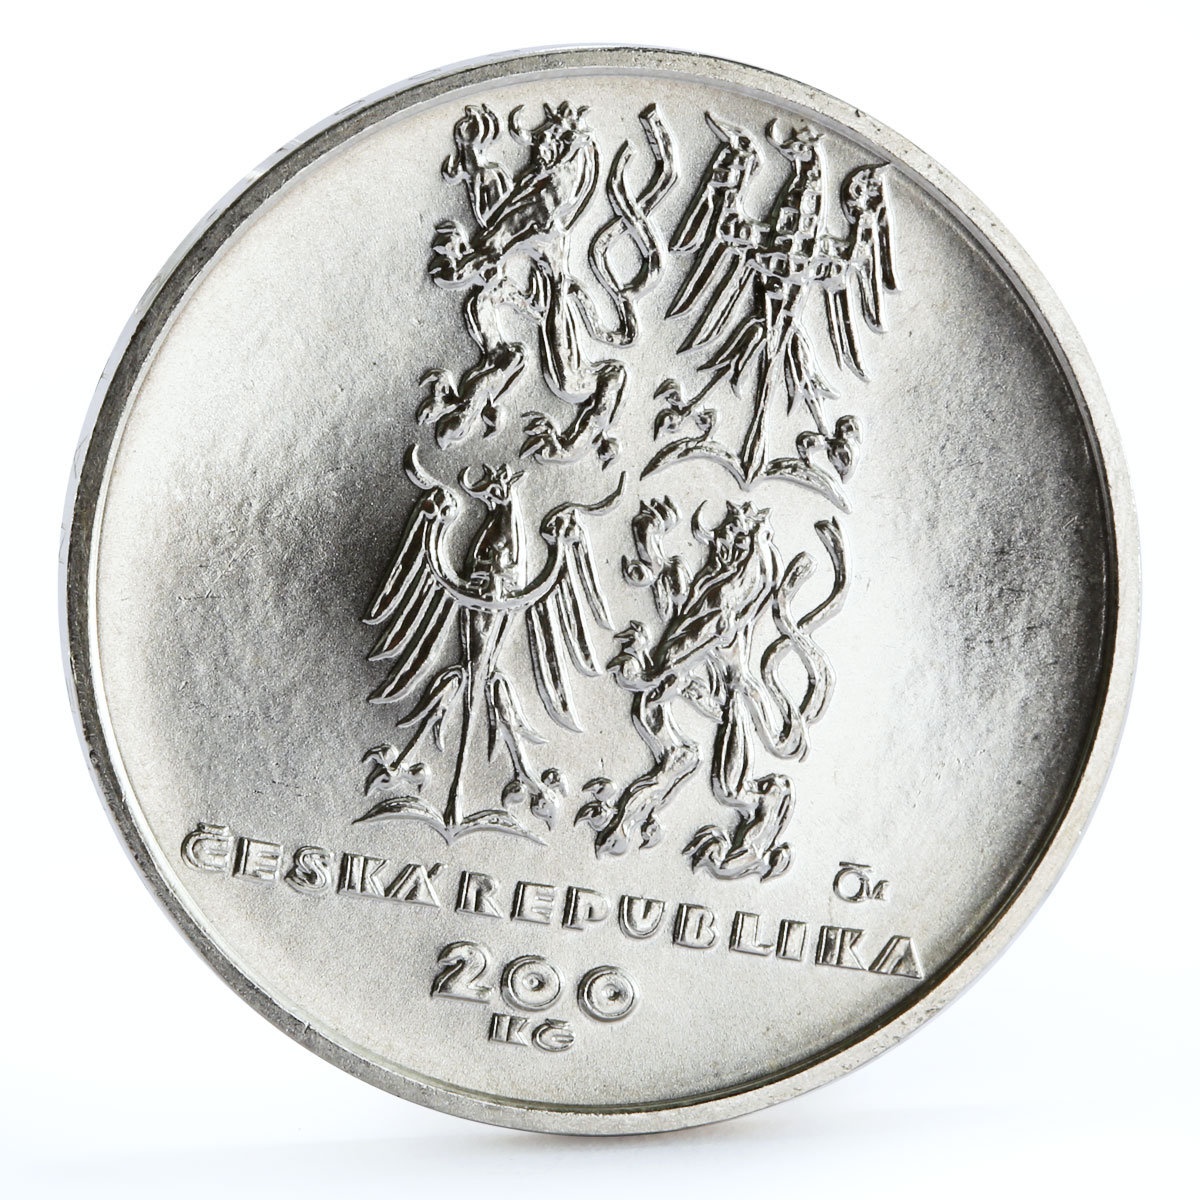 Czech Republic 200 korun Jubilee of Forming the NATO Alliance silver coin 1999